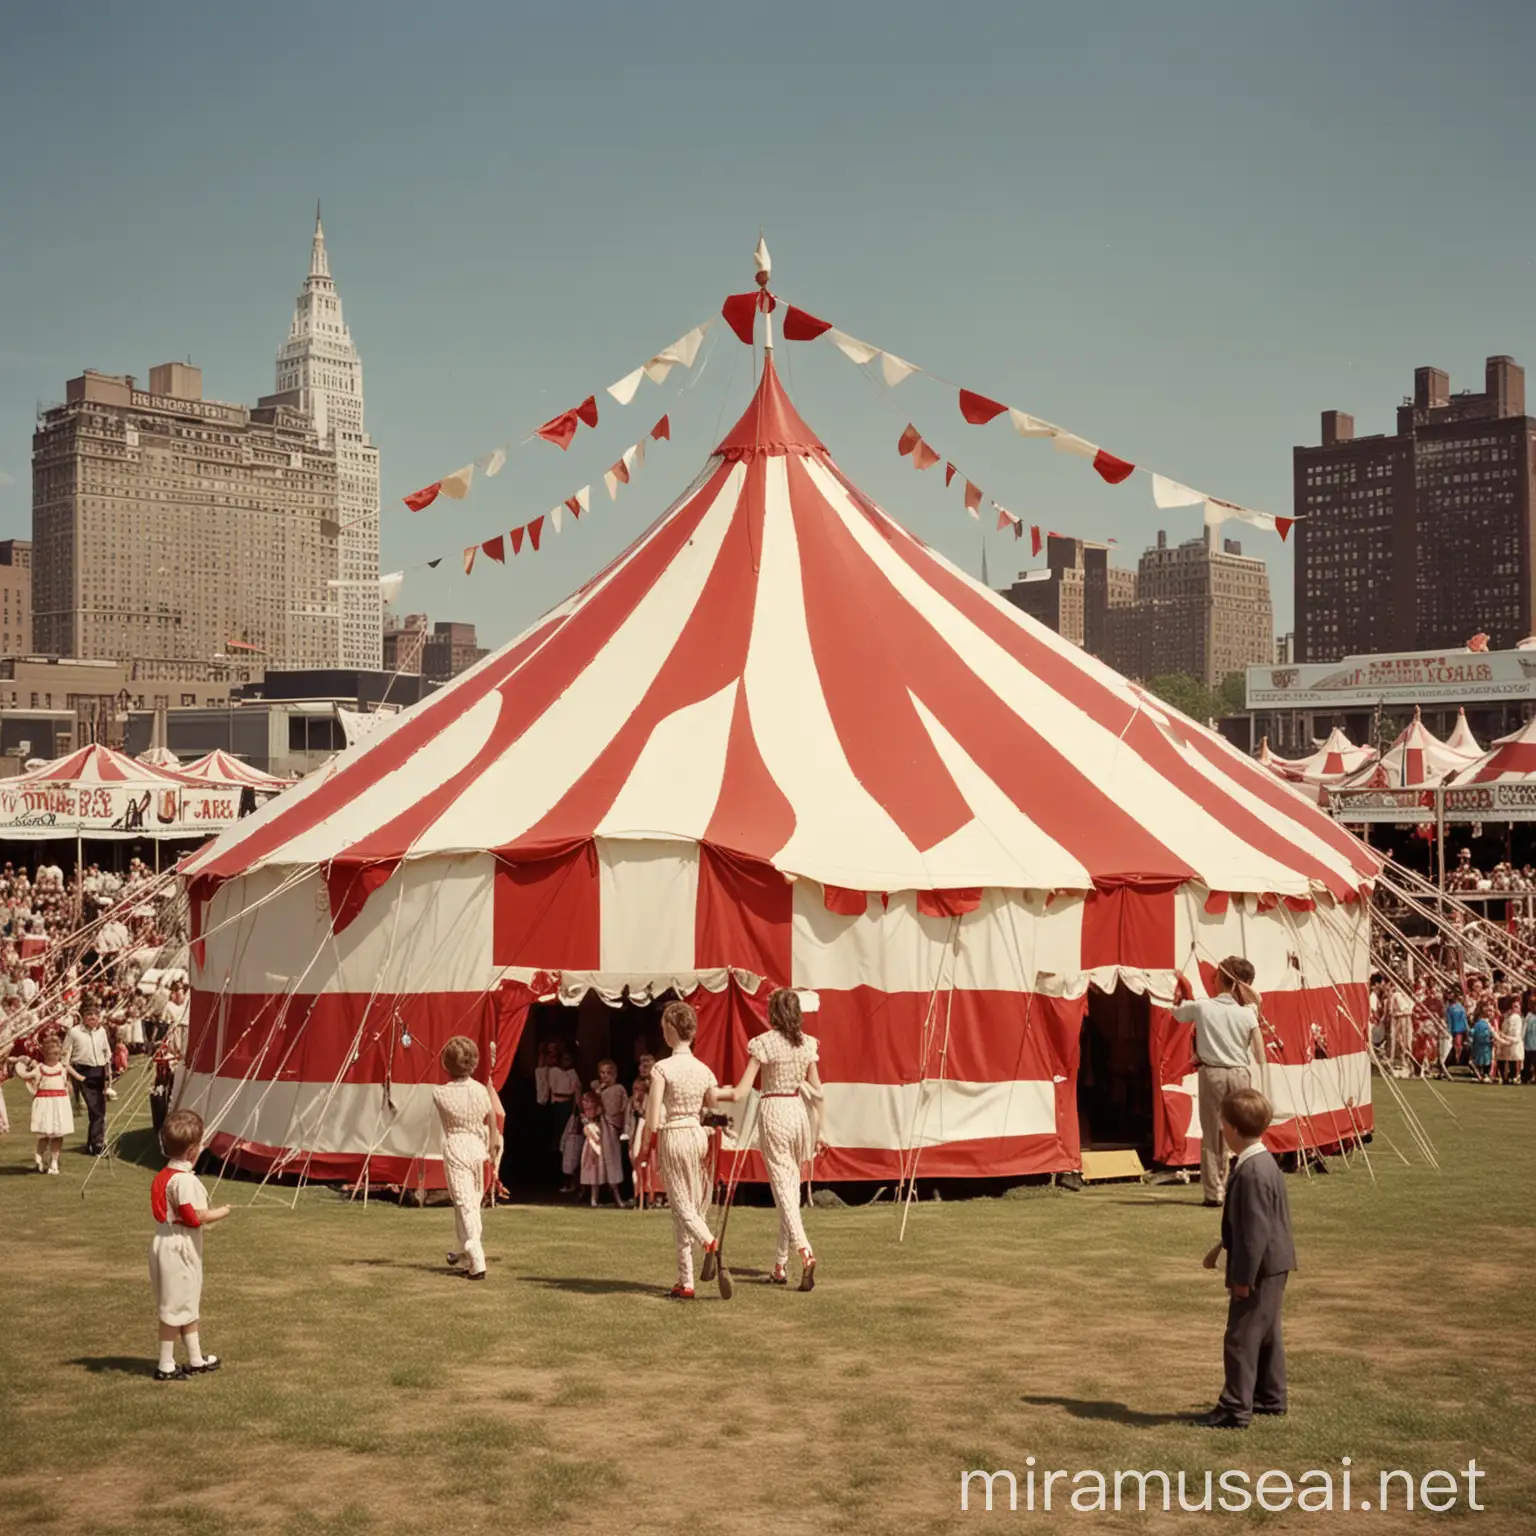 Obese Stilt Walkers Lead Children in 1950s Circus Scene